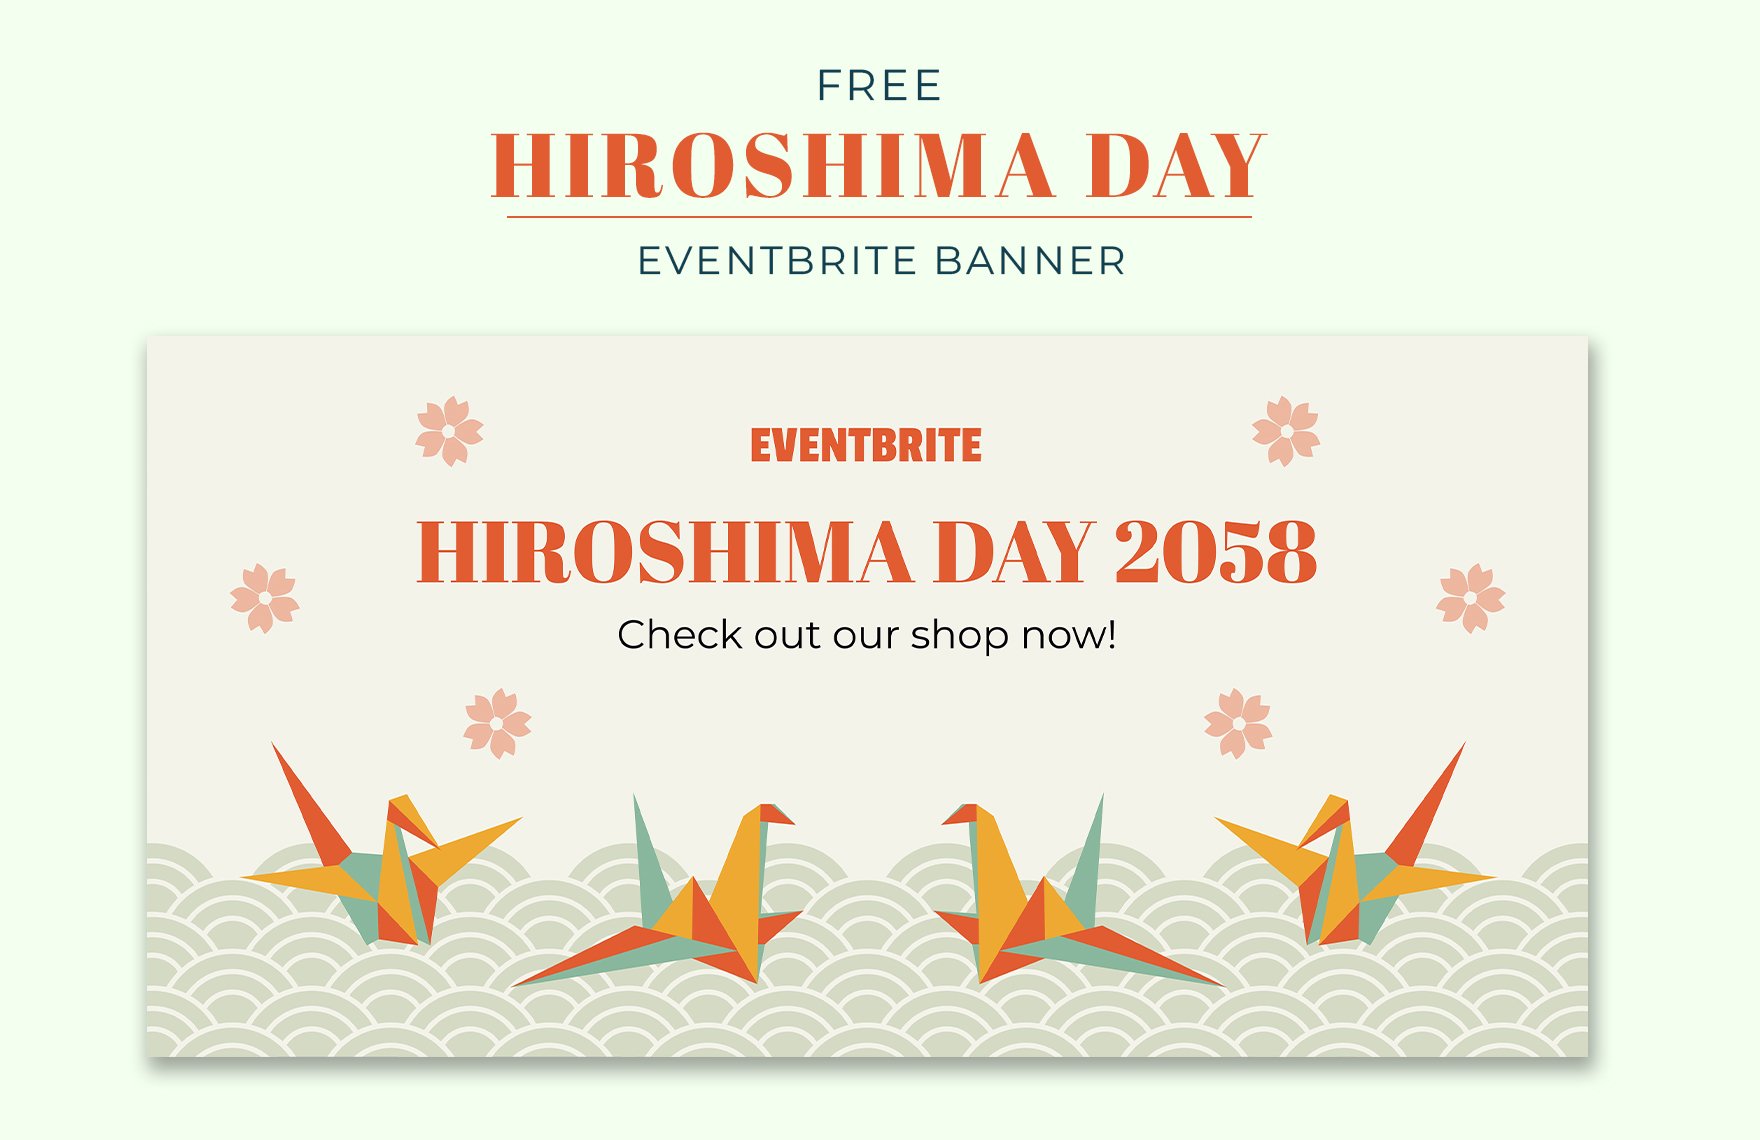 Free Hiroshima Day Eventbrite Banner in PDF, Illustrator, SVG, JPG